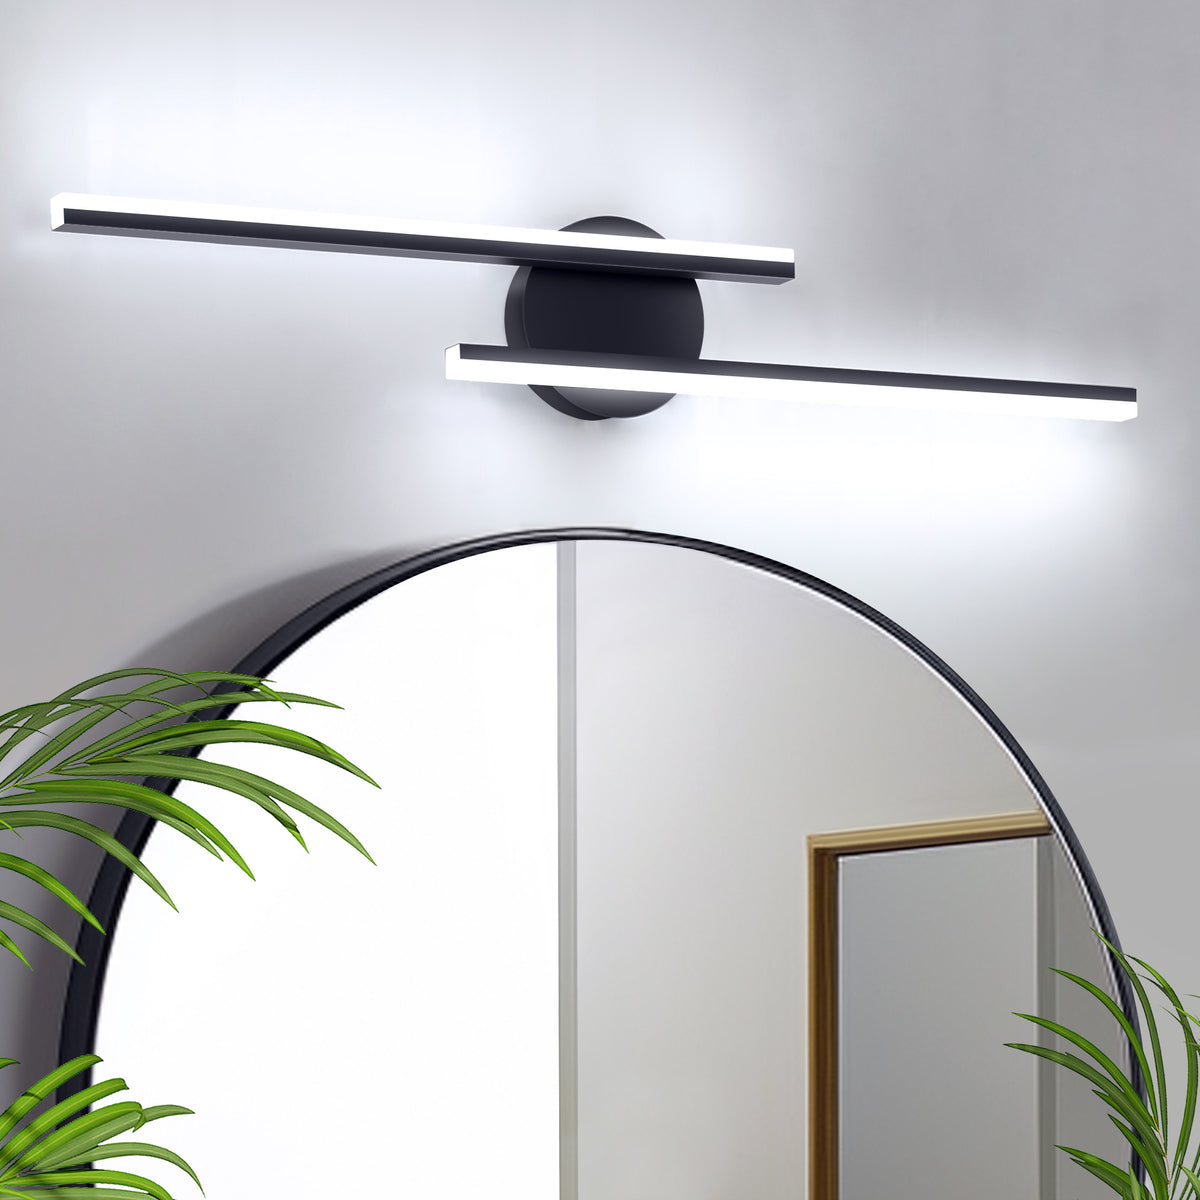 LED Lamp - Dimmable LED Desk, Floor, String Lamps | TaoTronics